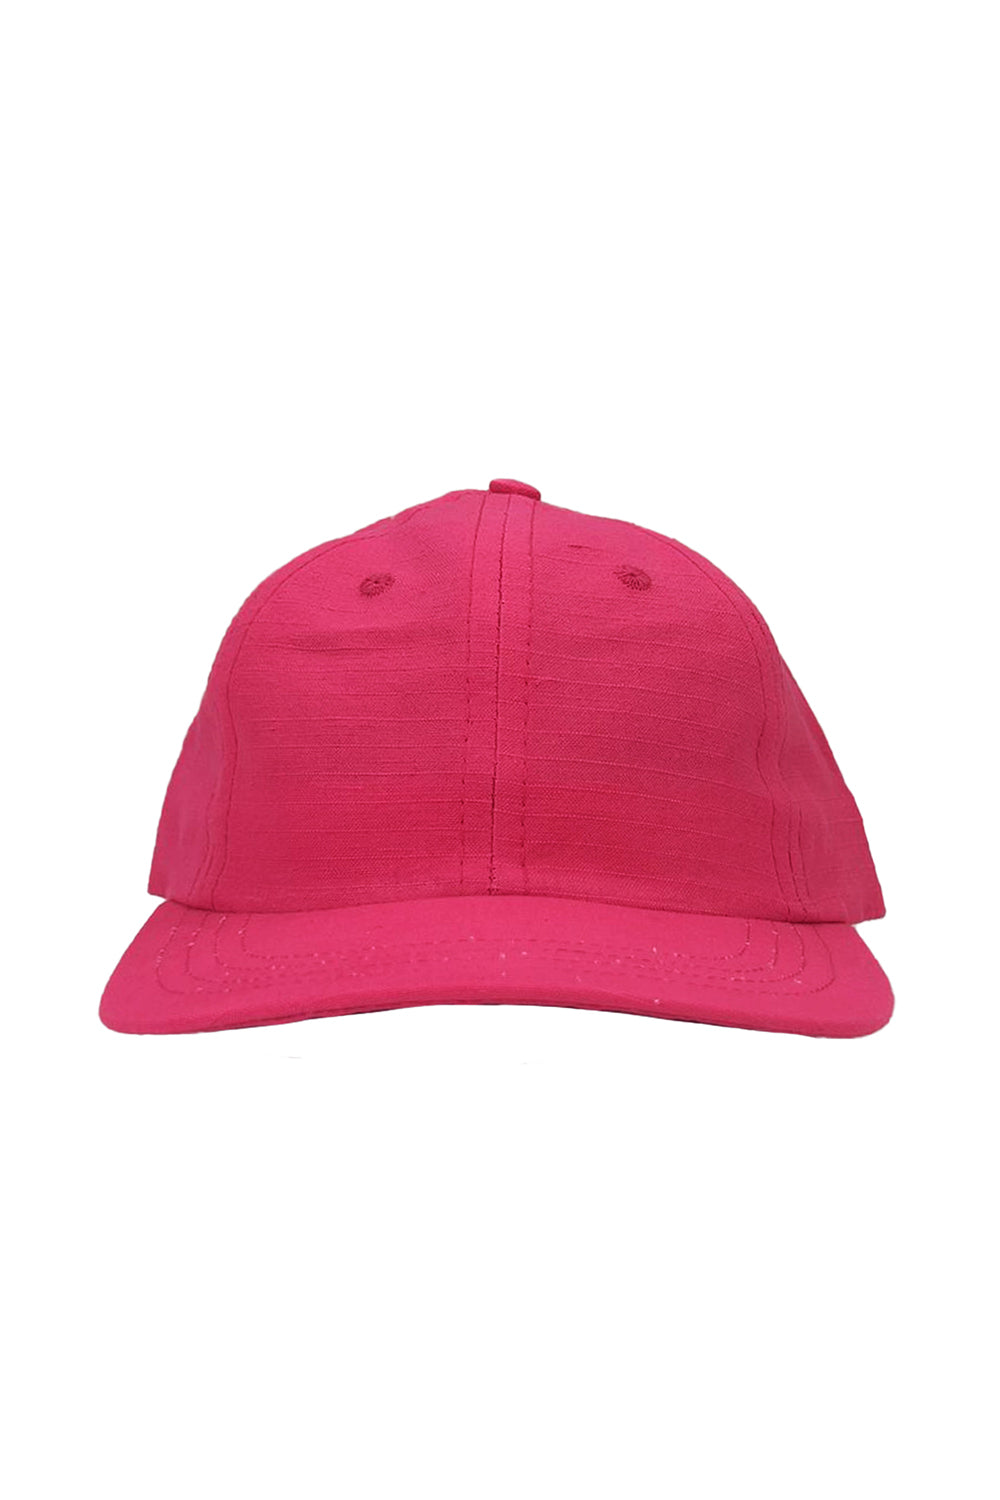 Chenga Ripstop Cap | Jungmaven Hemp Clothing & Accessories / Color: Pink Grapefruit